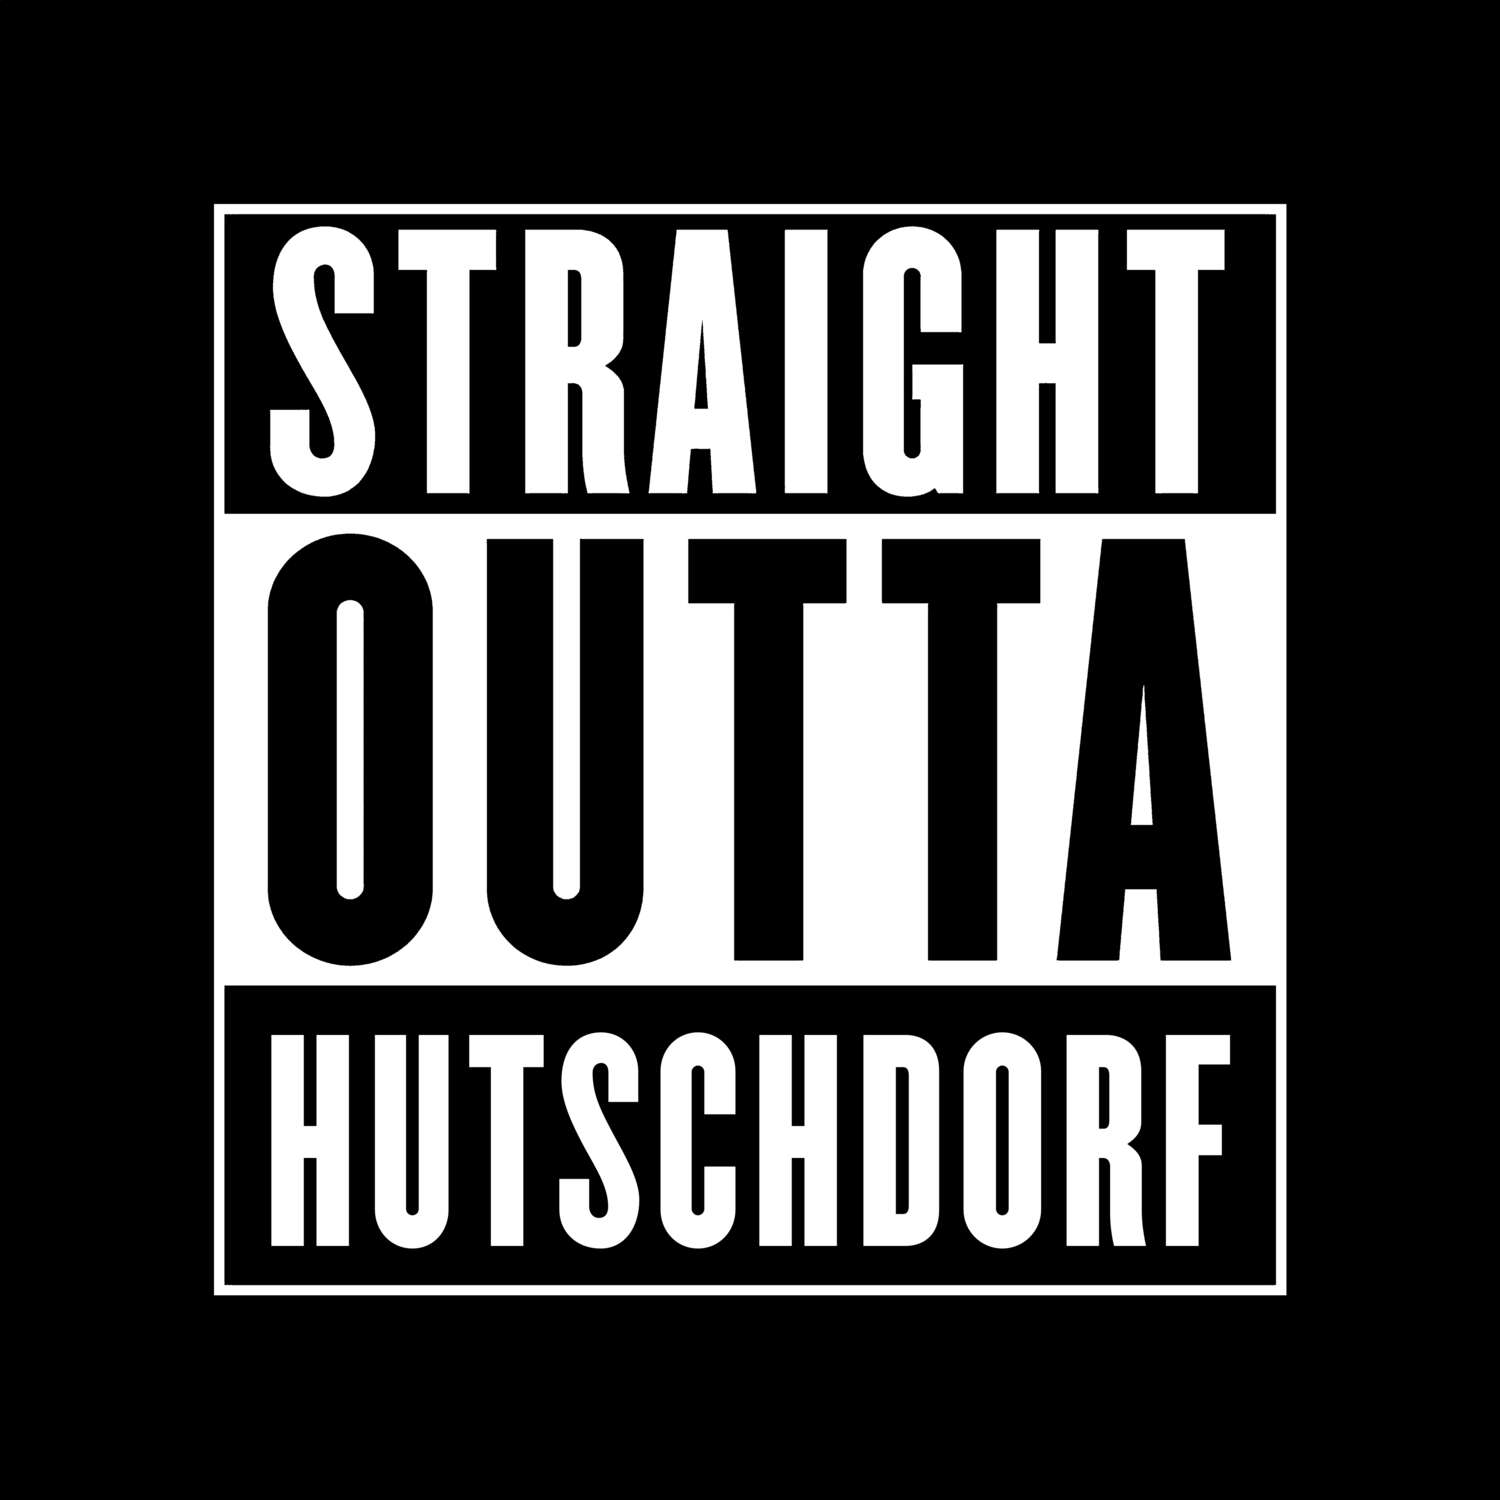 Hutschdorf T-Shirt »Straight Outta«